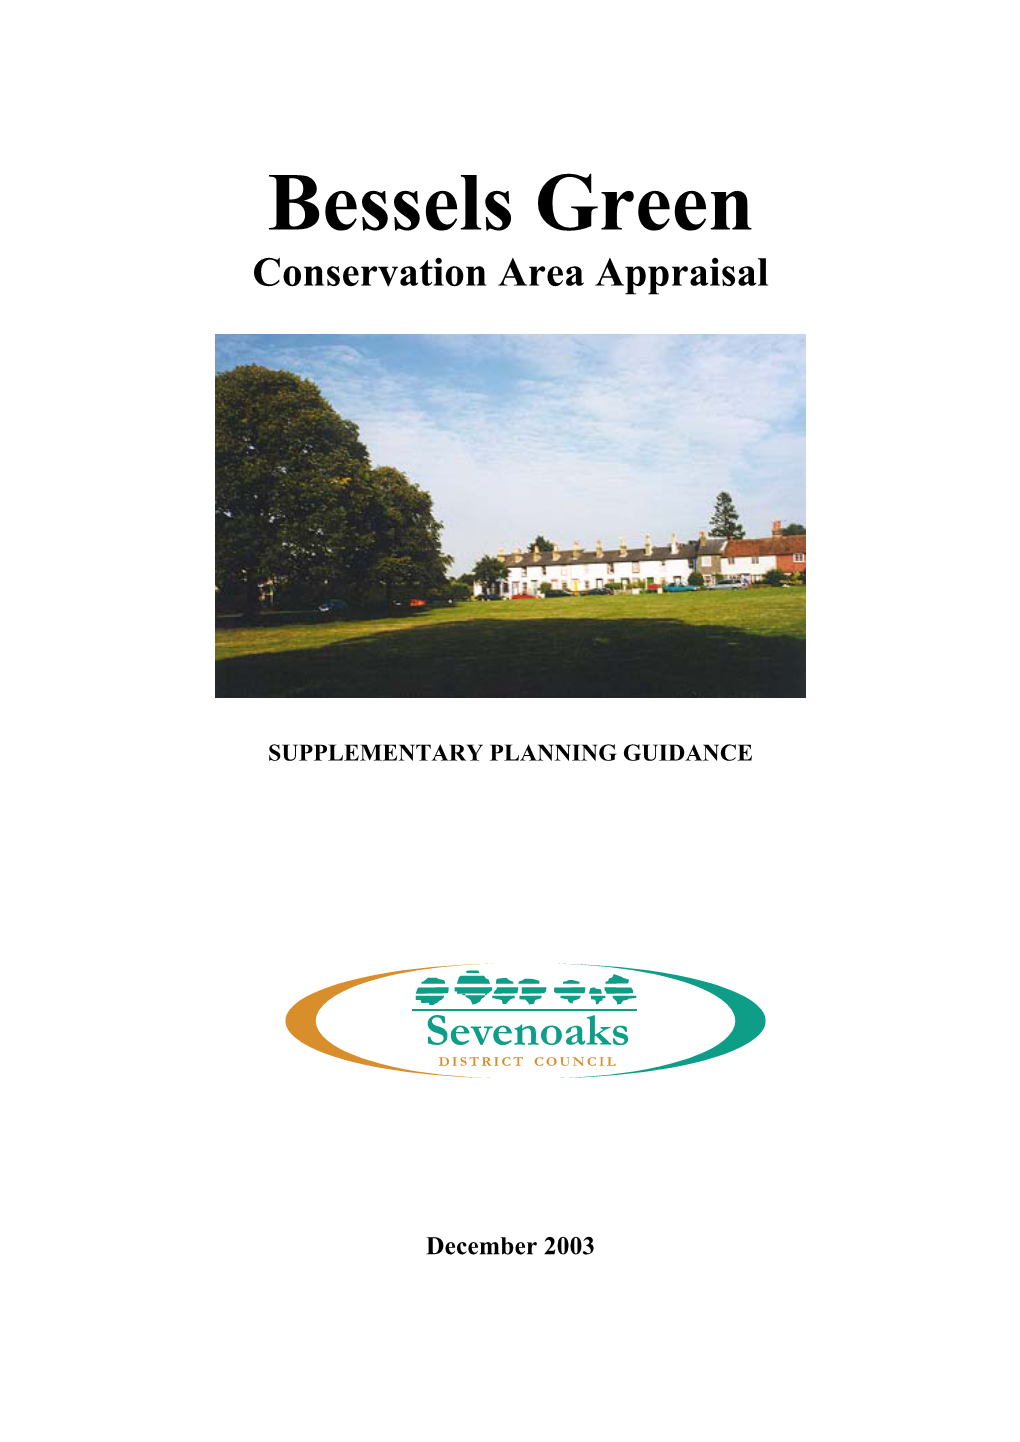 Bessels Green Conservation Area Appraisal